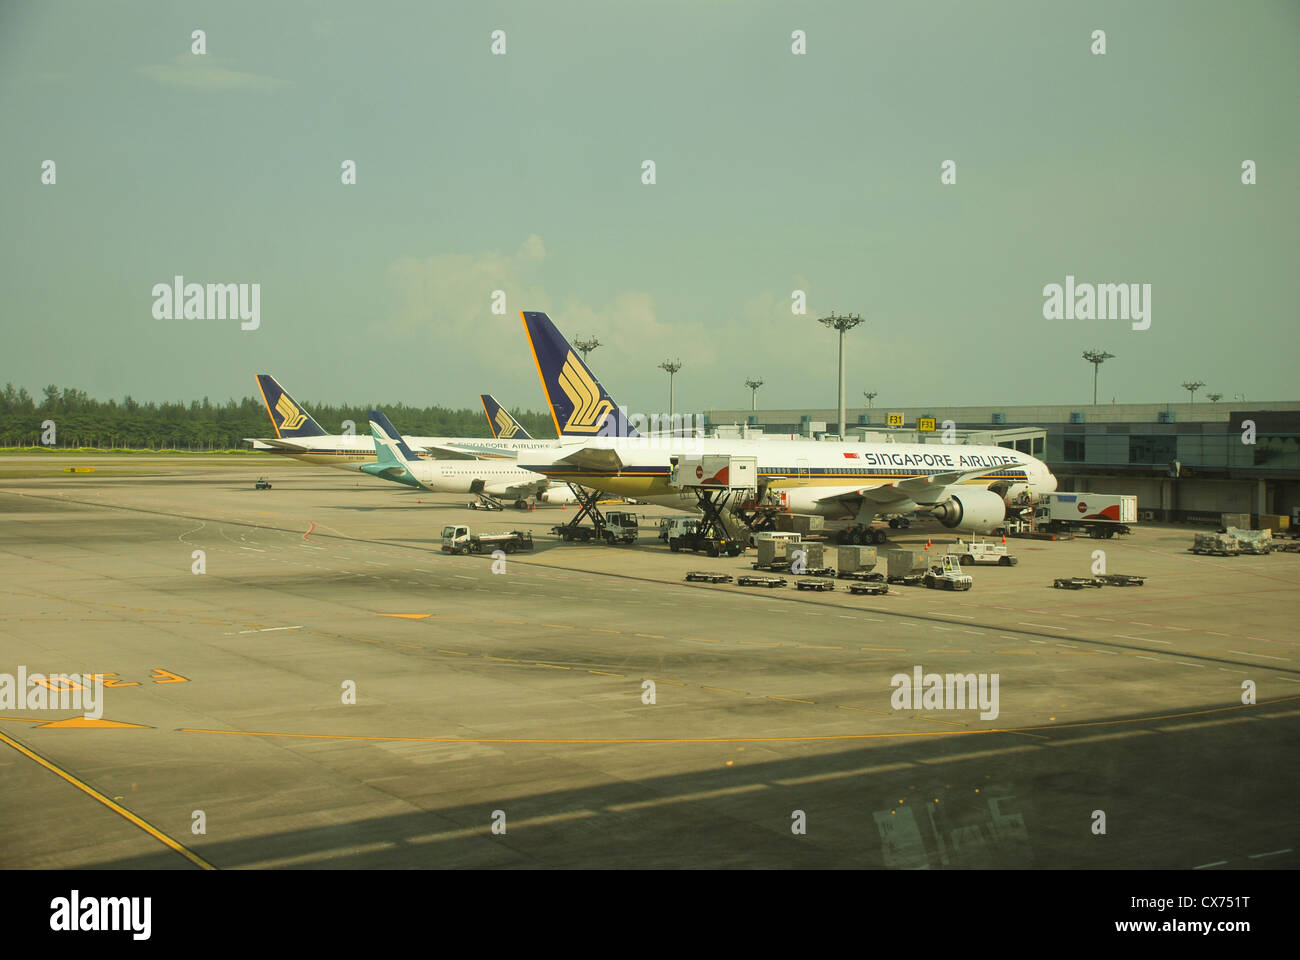 Singapore Changi Airport Stock Photo